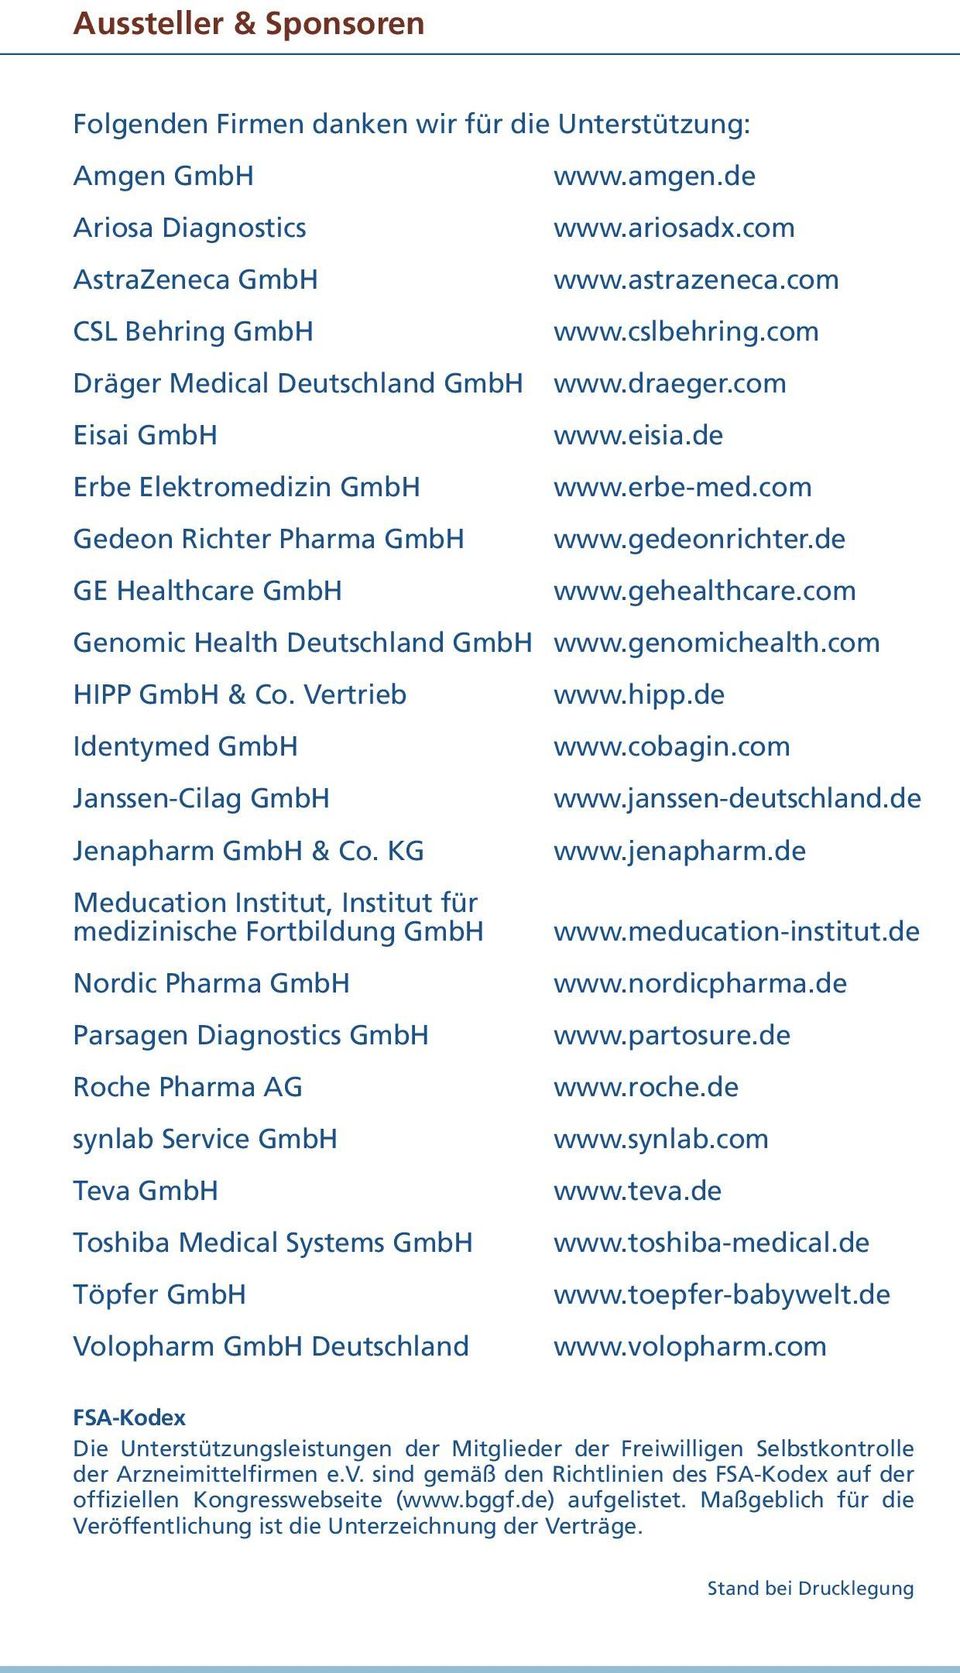 gehealthcare.com Genomic Health Deutschland GmbH www.genomichealth.com HIPP GmbH & Co. Vertrieb www.hipp.de Identymed GmbH www.cobagin.com Janssen-Cilag GmbH www.janssen-deutschland.